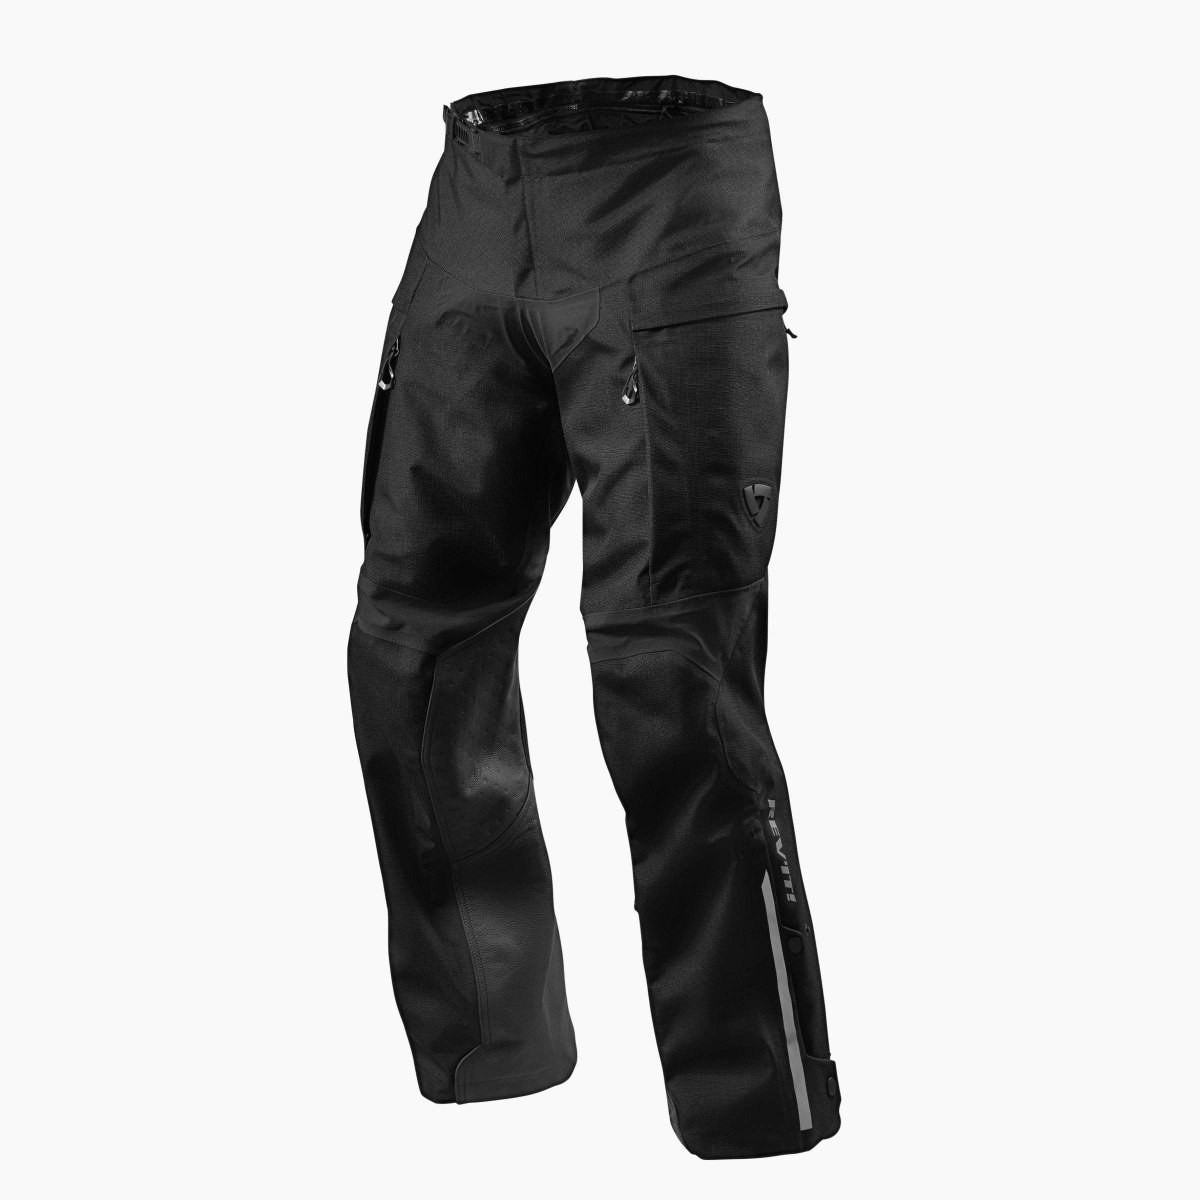 Image of REV'IT! Component H2O Short Black Motorcycle Pants Size M EN